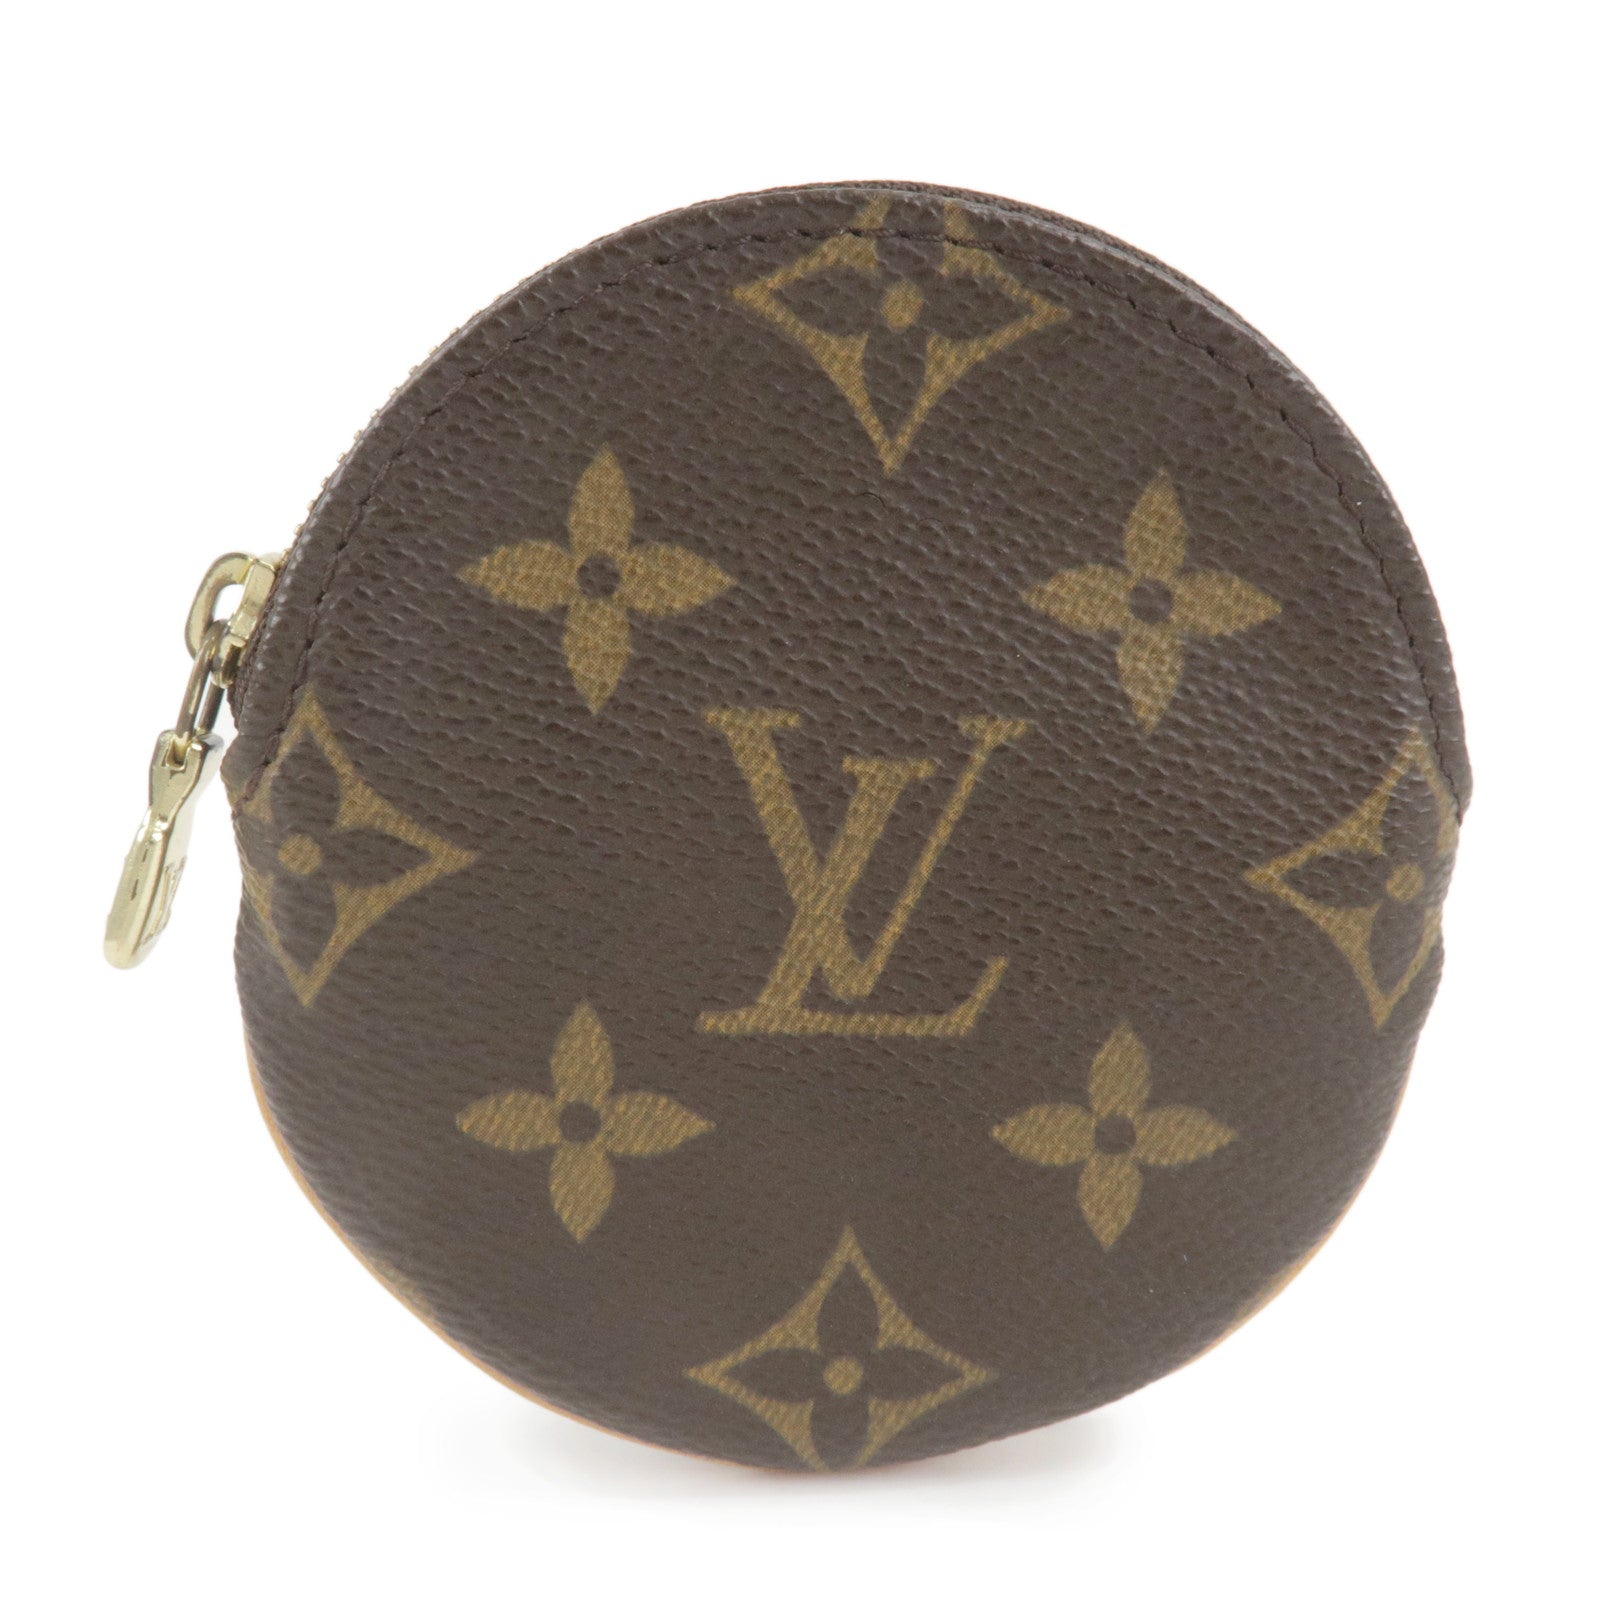 Louis Vuitton Round Coin Purse Monogram Canvas